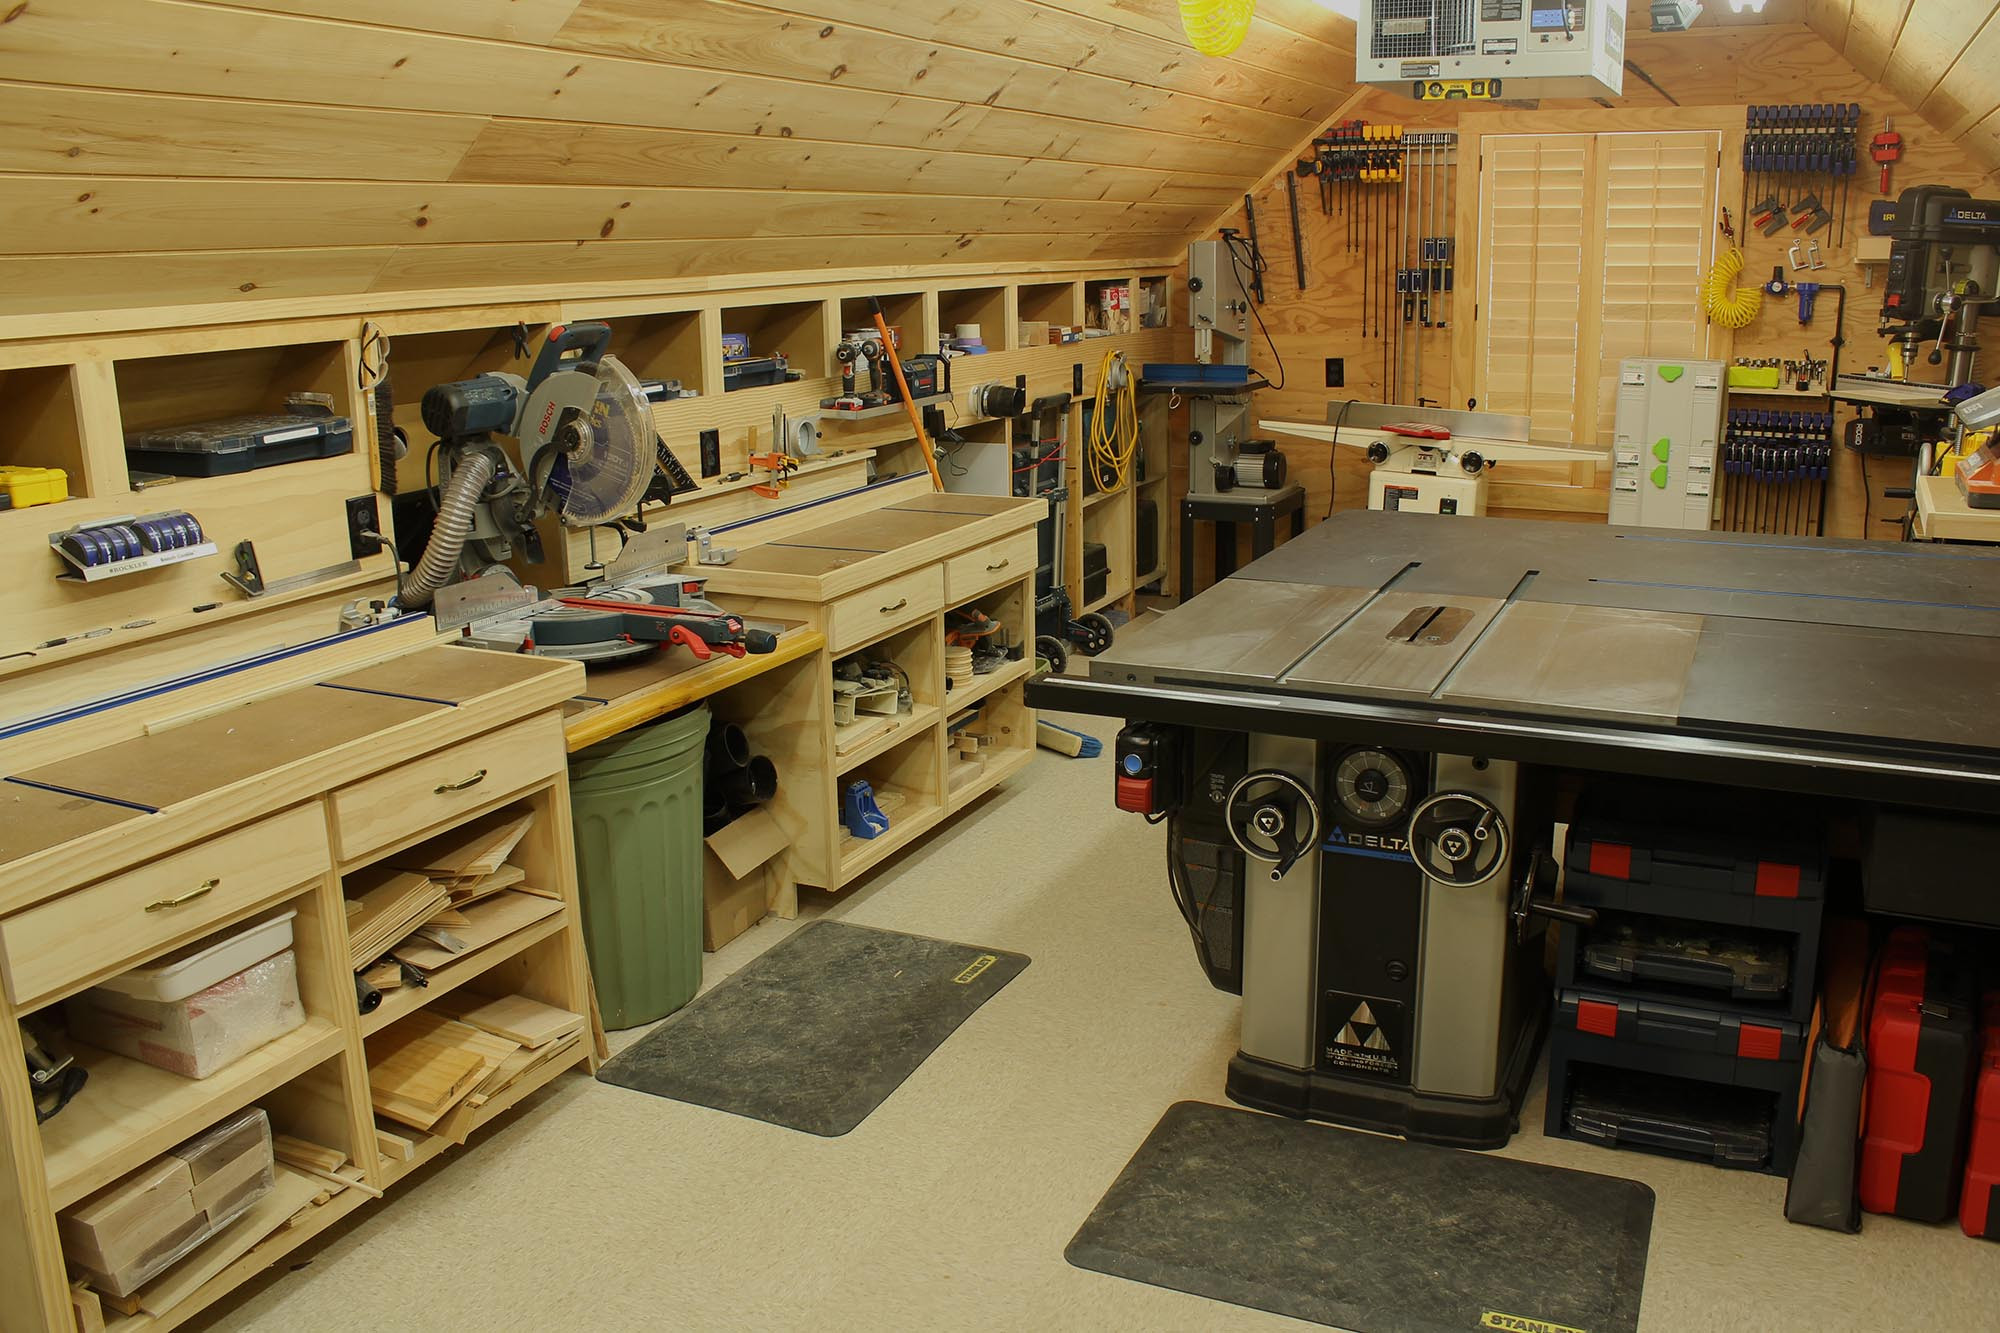 Best ideas about DIY Wood Shop
. Save or Pin Woodshop Workshop 2nd Floor of Garage Now.